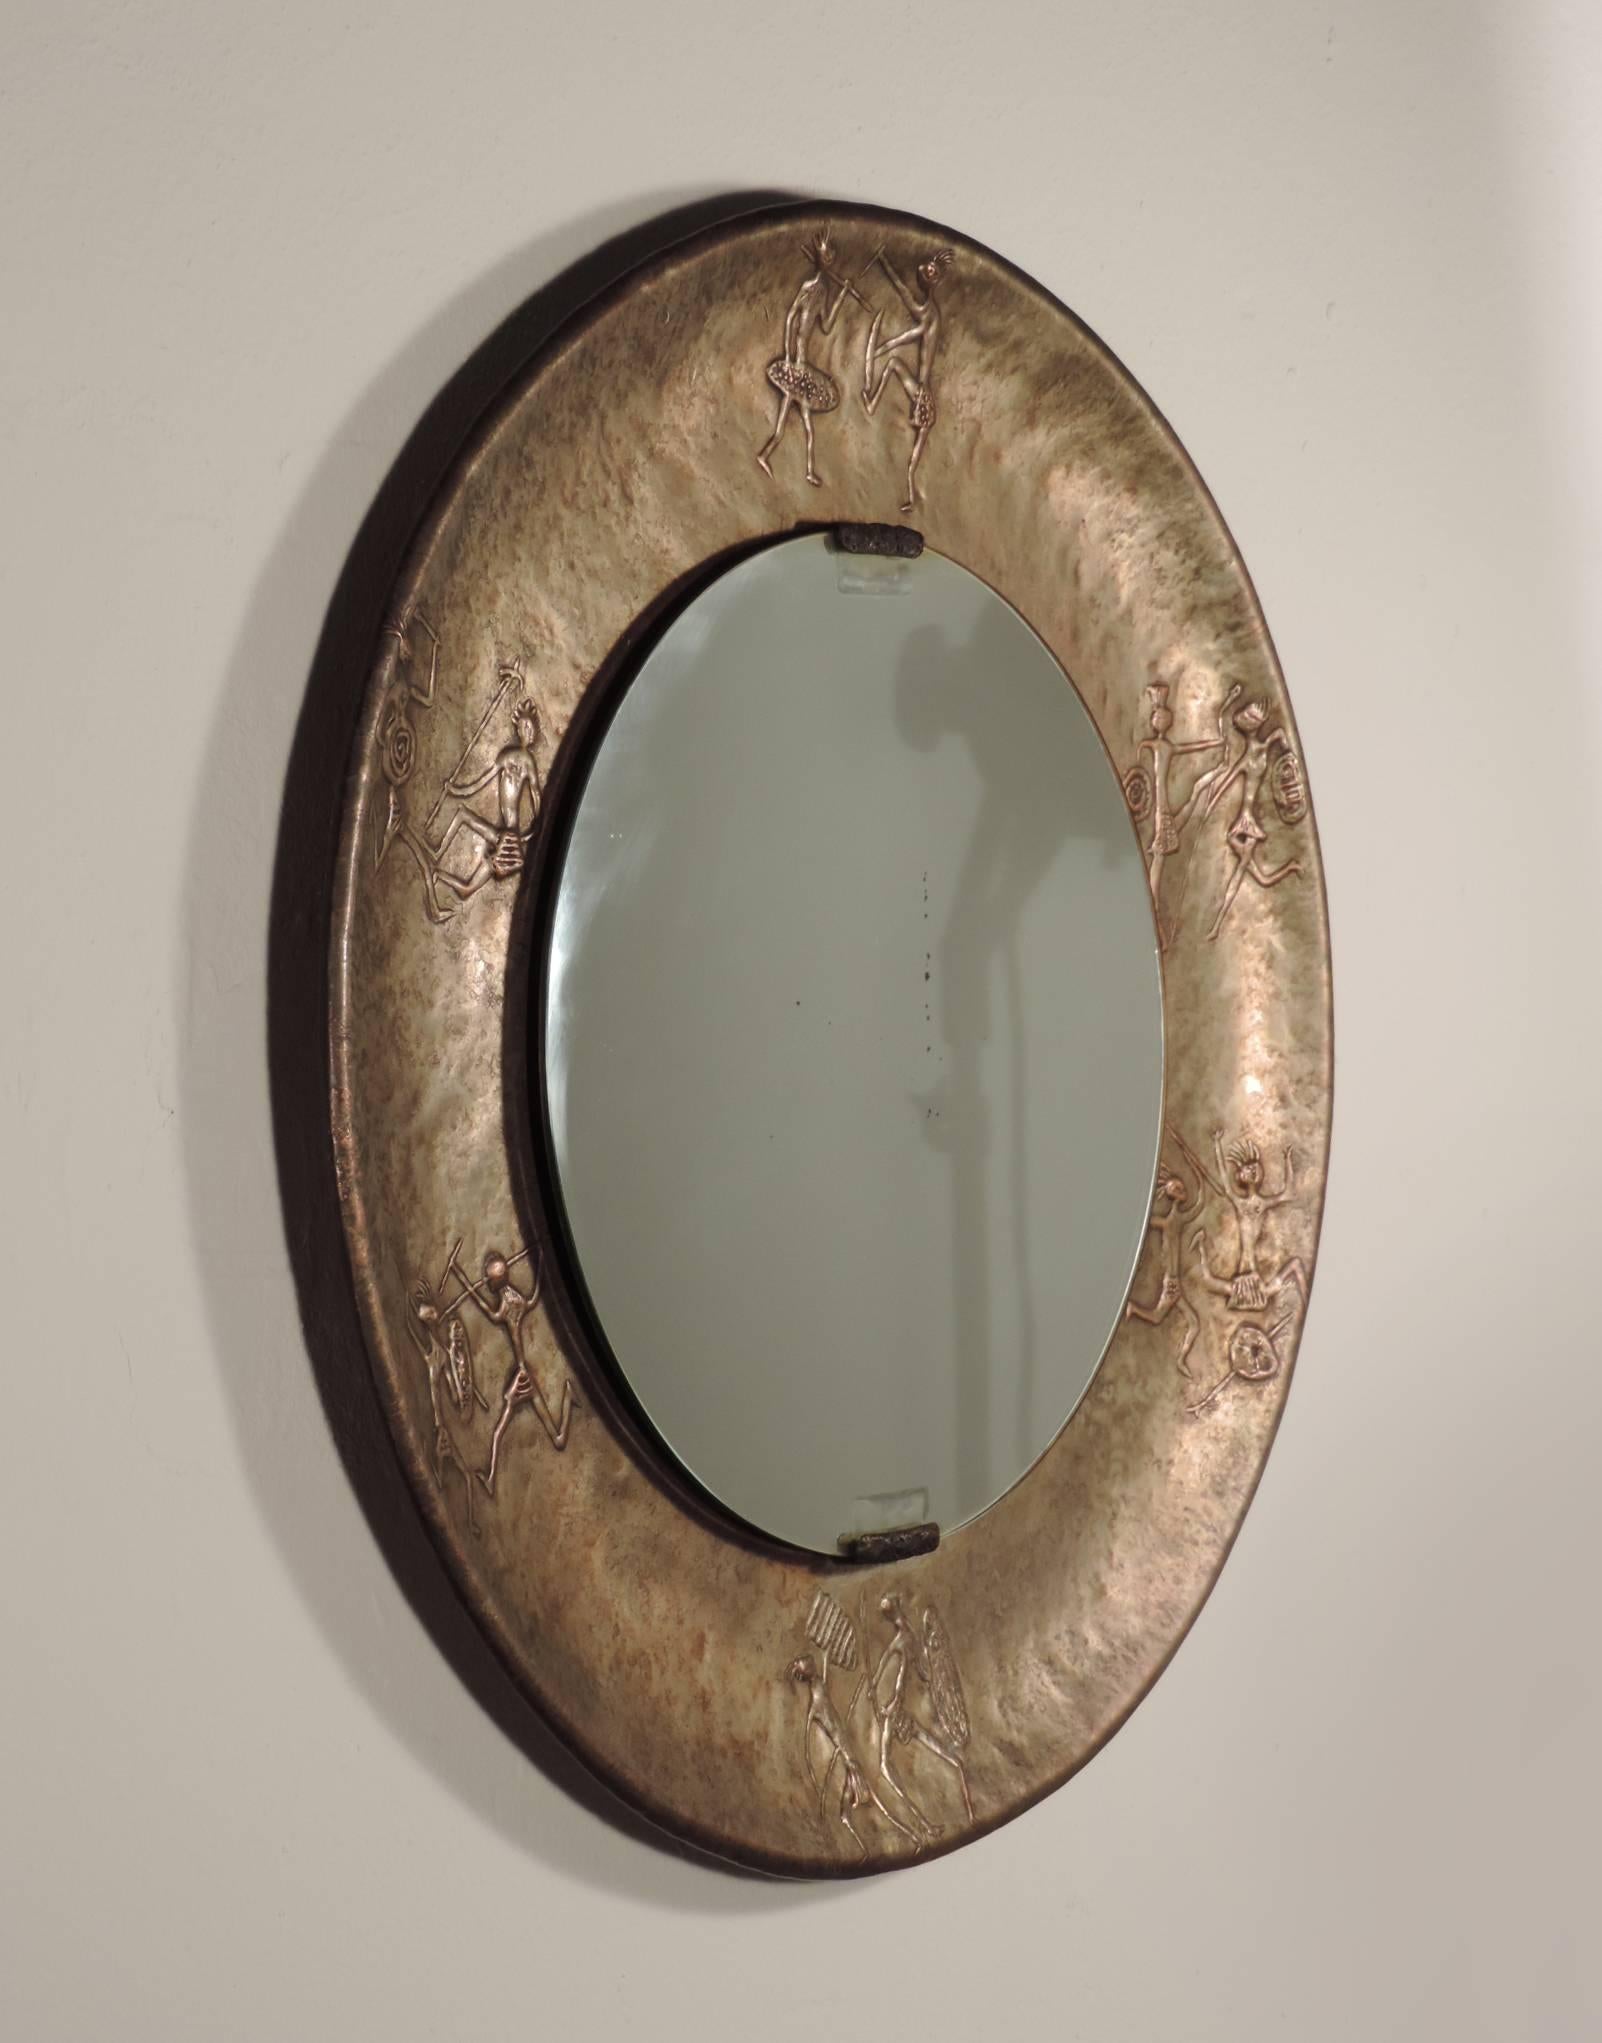 Hammered Angelo Bragalini Tribal Wall Mirror